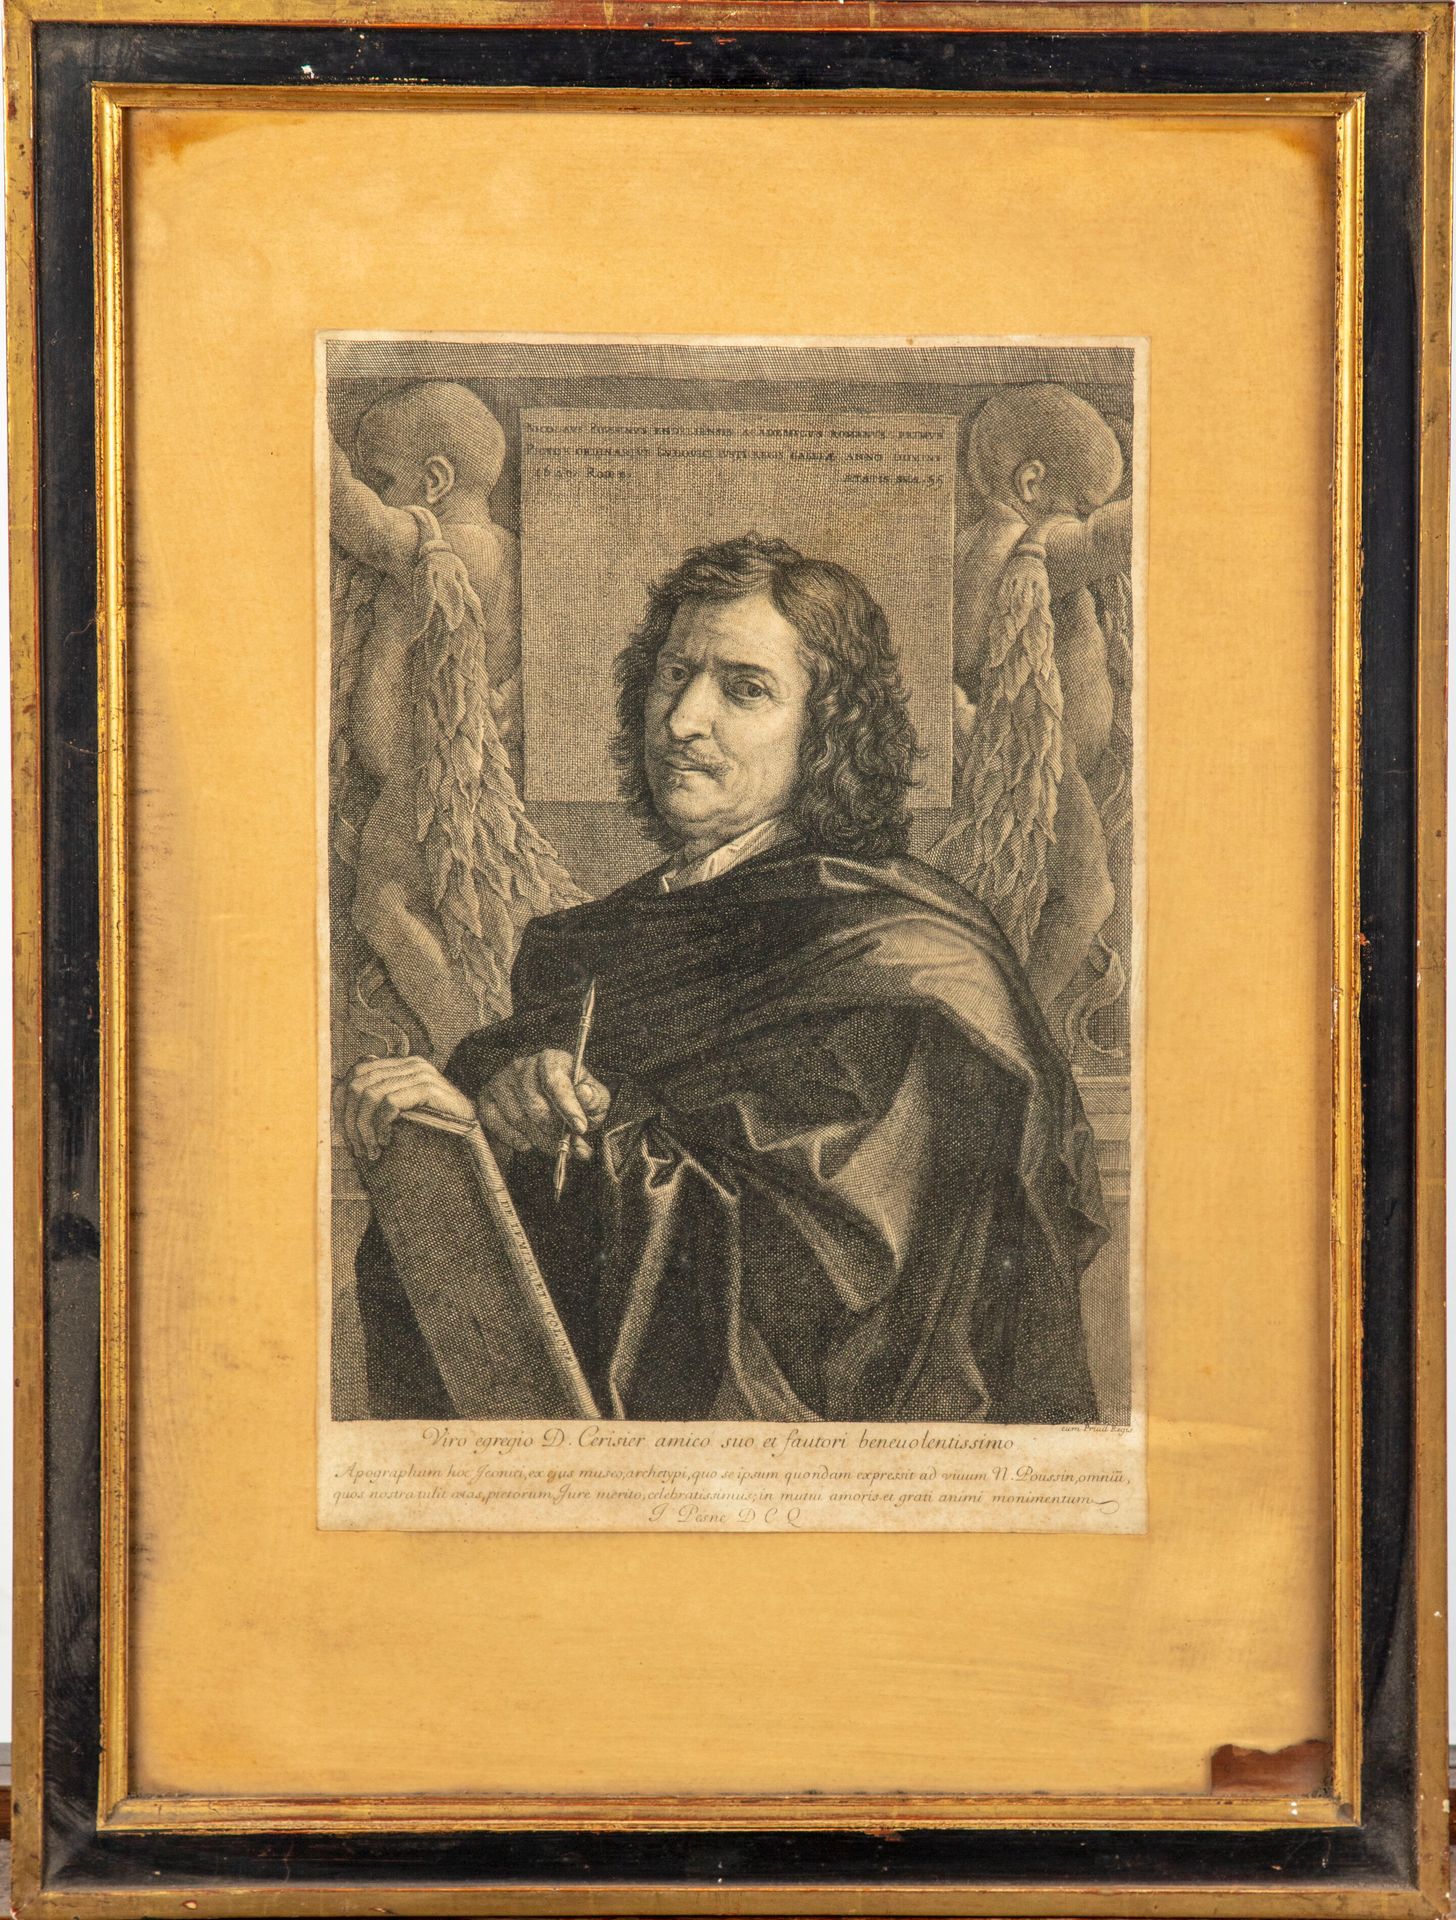 PASNE 让-佩斯内 (1623 - 1700)

根据尼古拉-普桑的自画像绘制的版画

36x25厘米

小污点